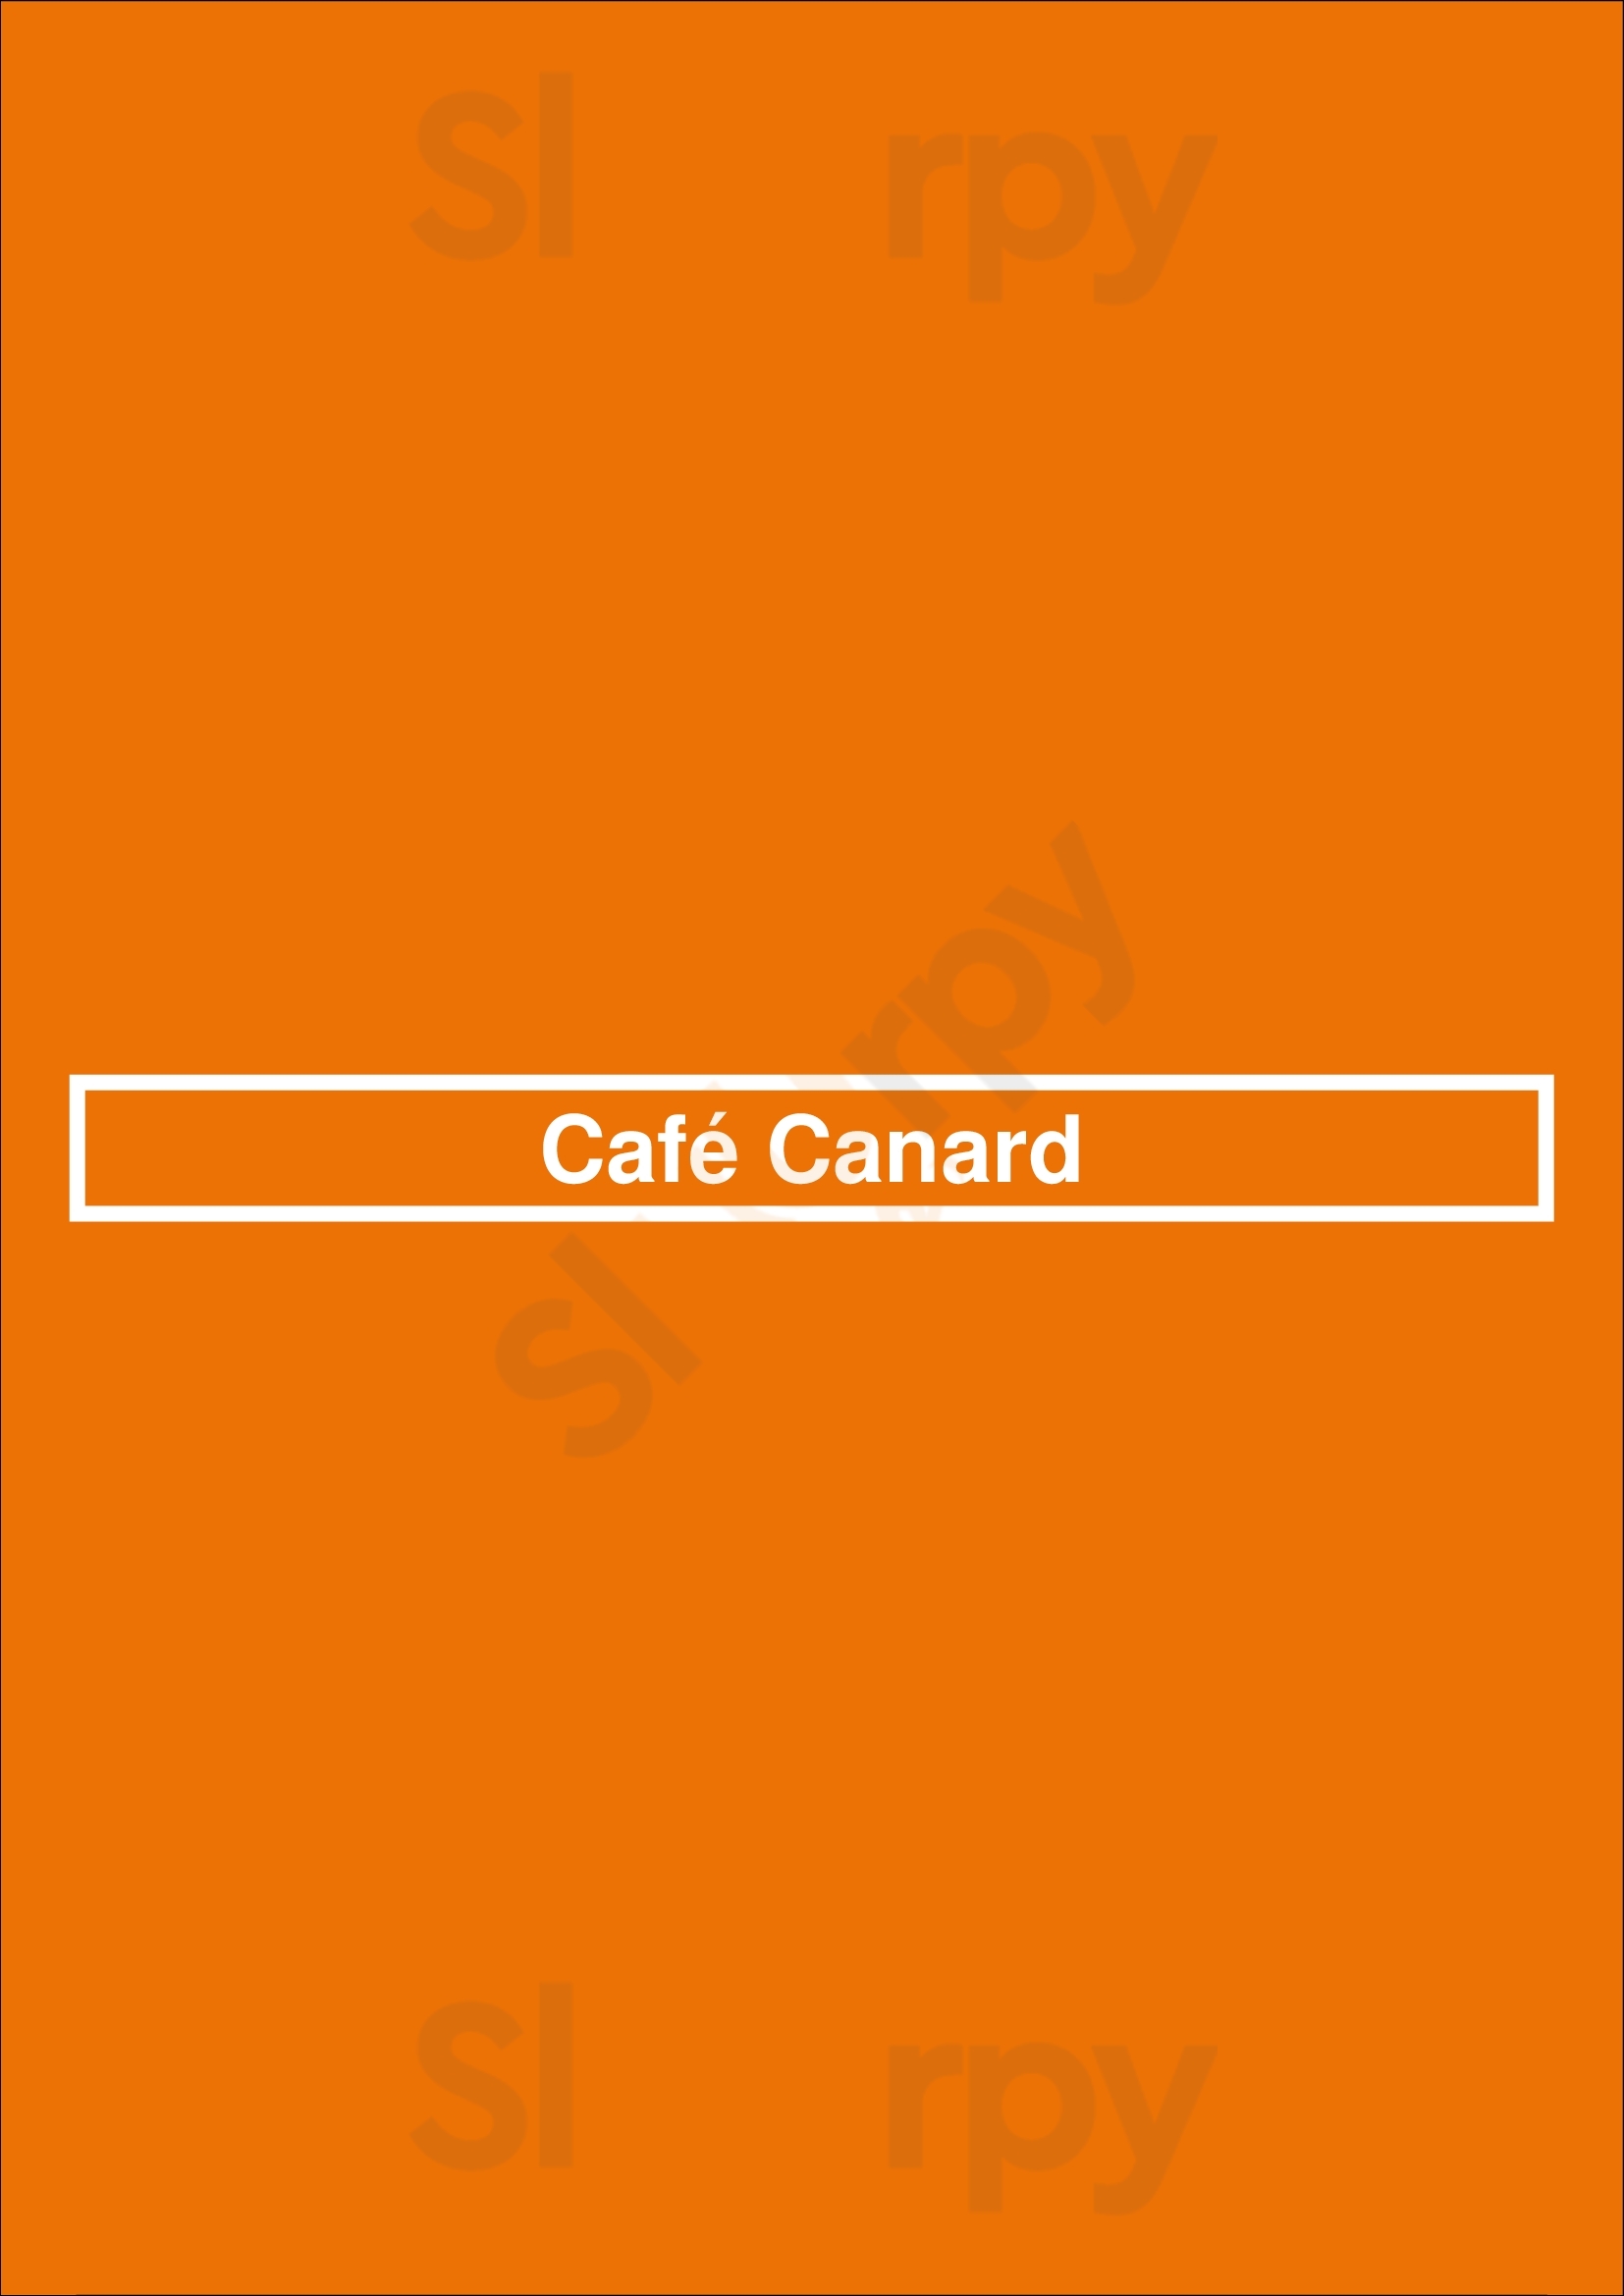 Café Canard Lyon Menu - 1